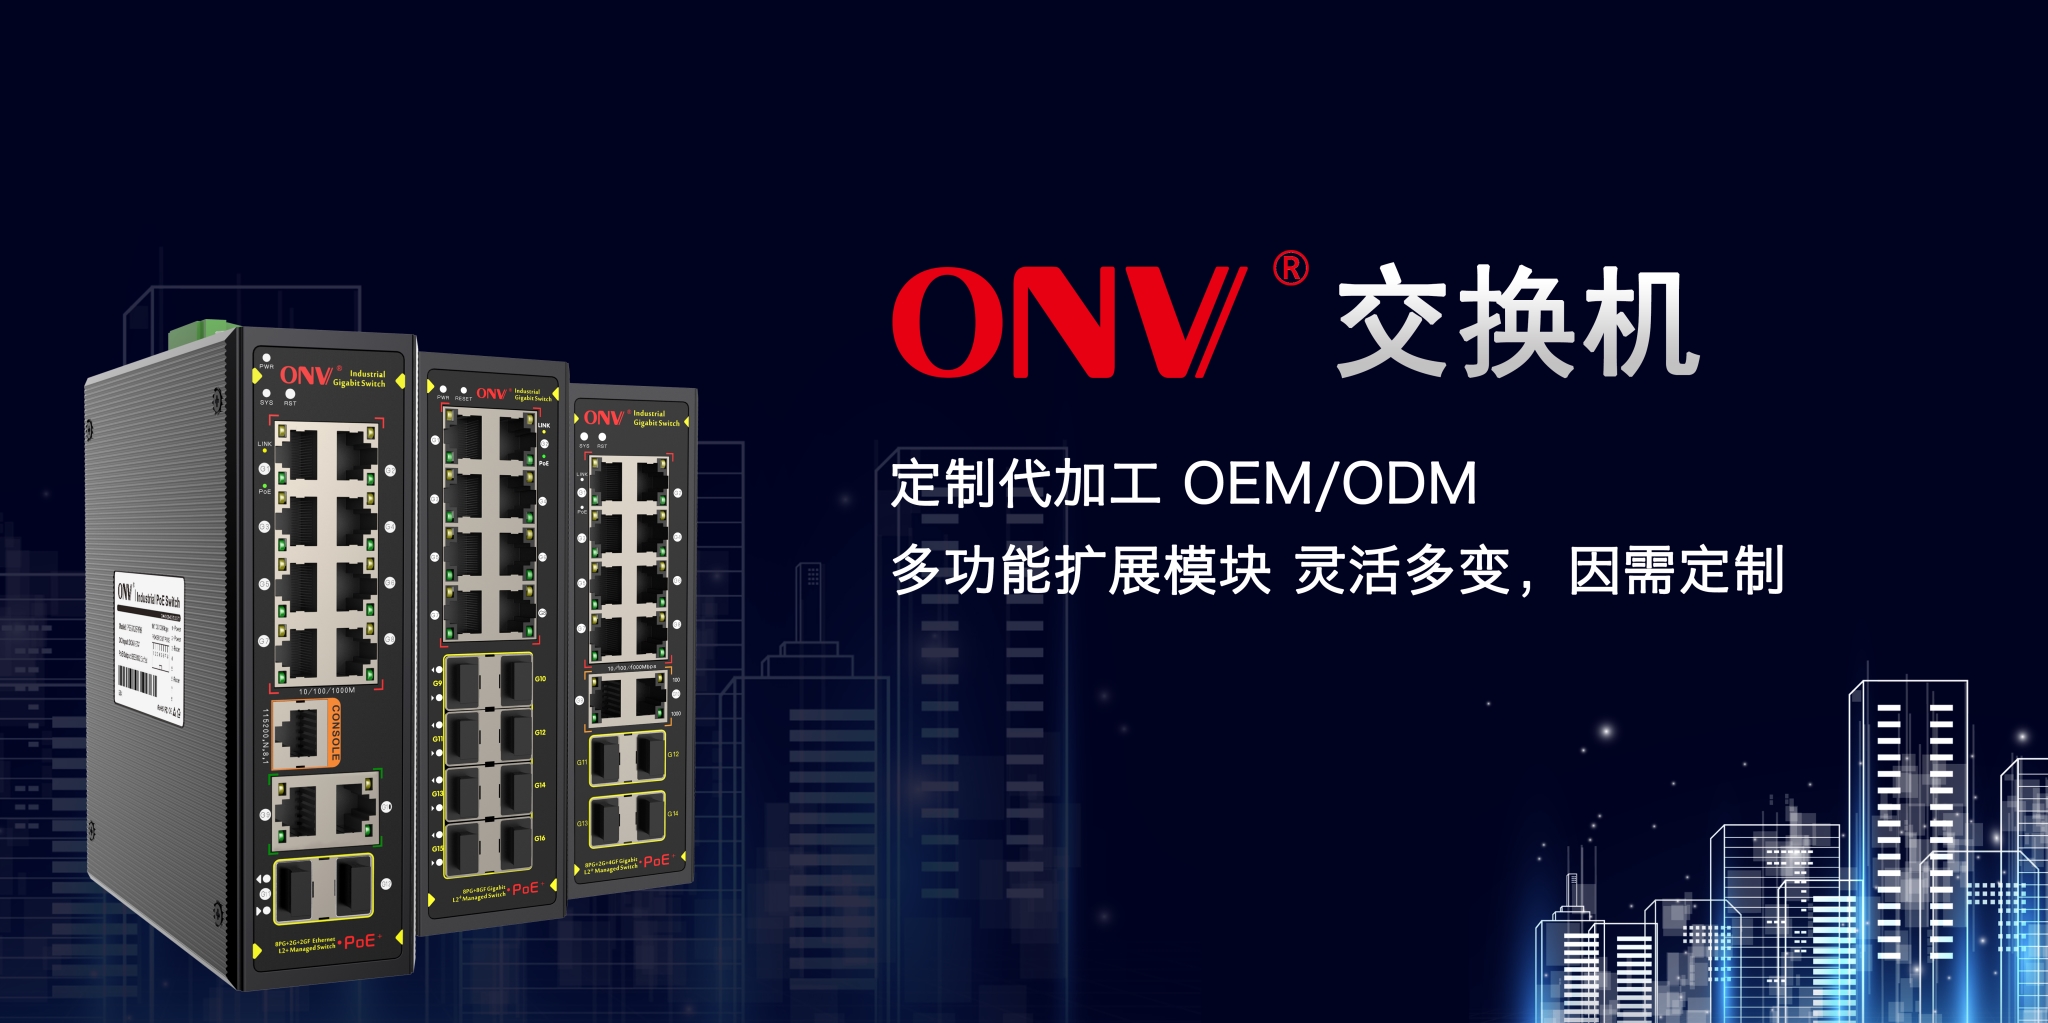 ONV-您的交换机高级定制专家